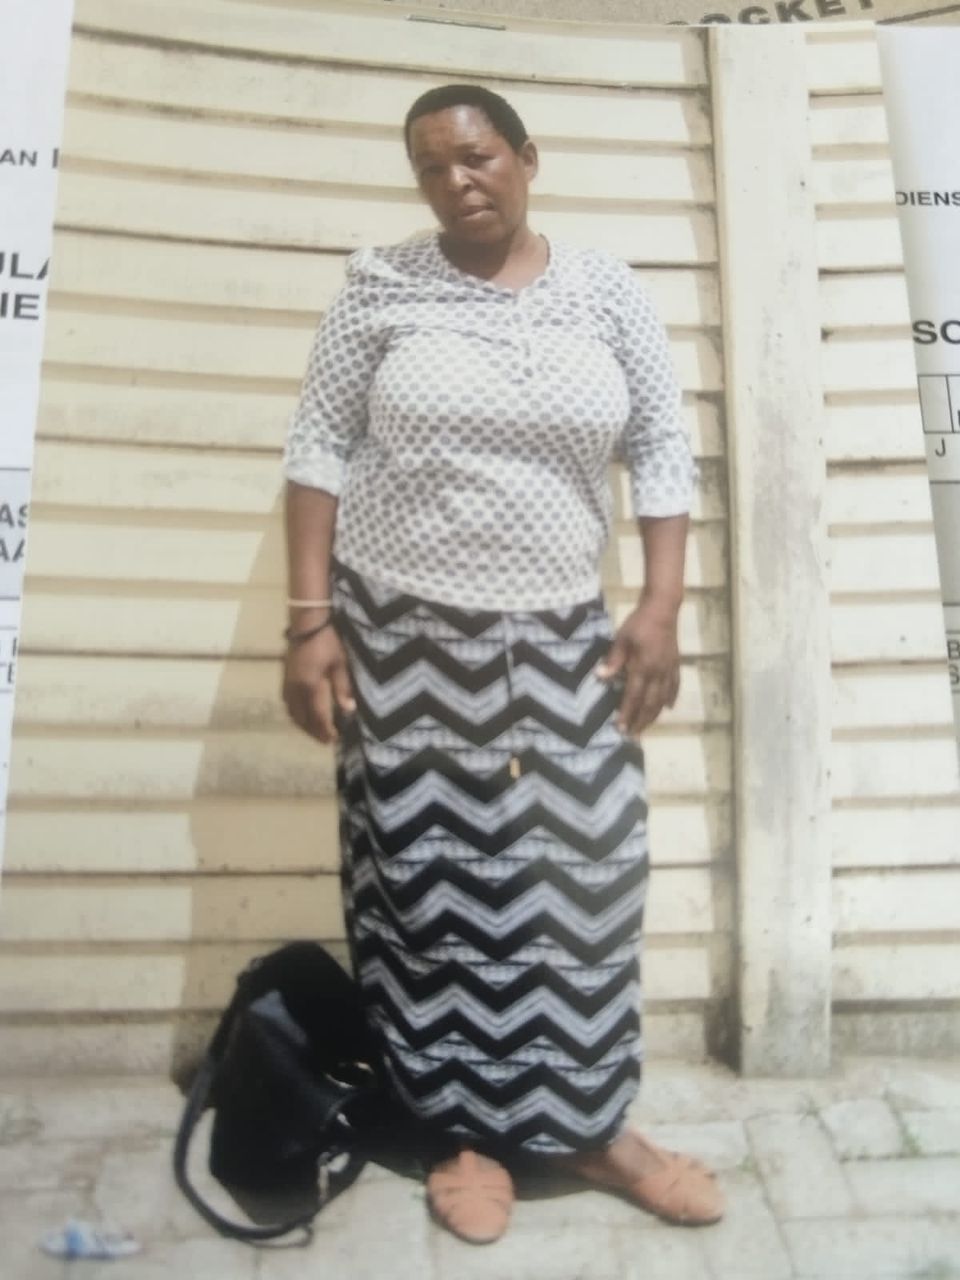 Help police find missing Julia Cithiwe Mboyani